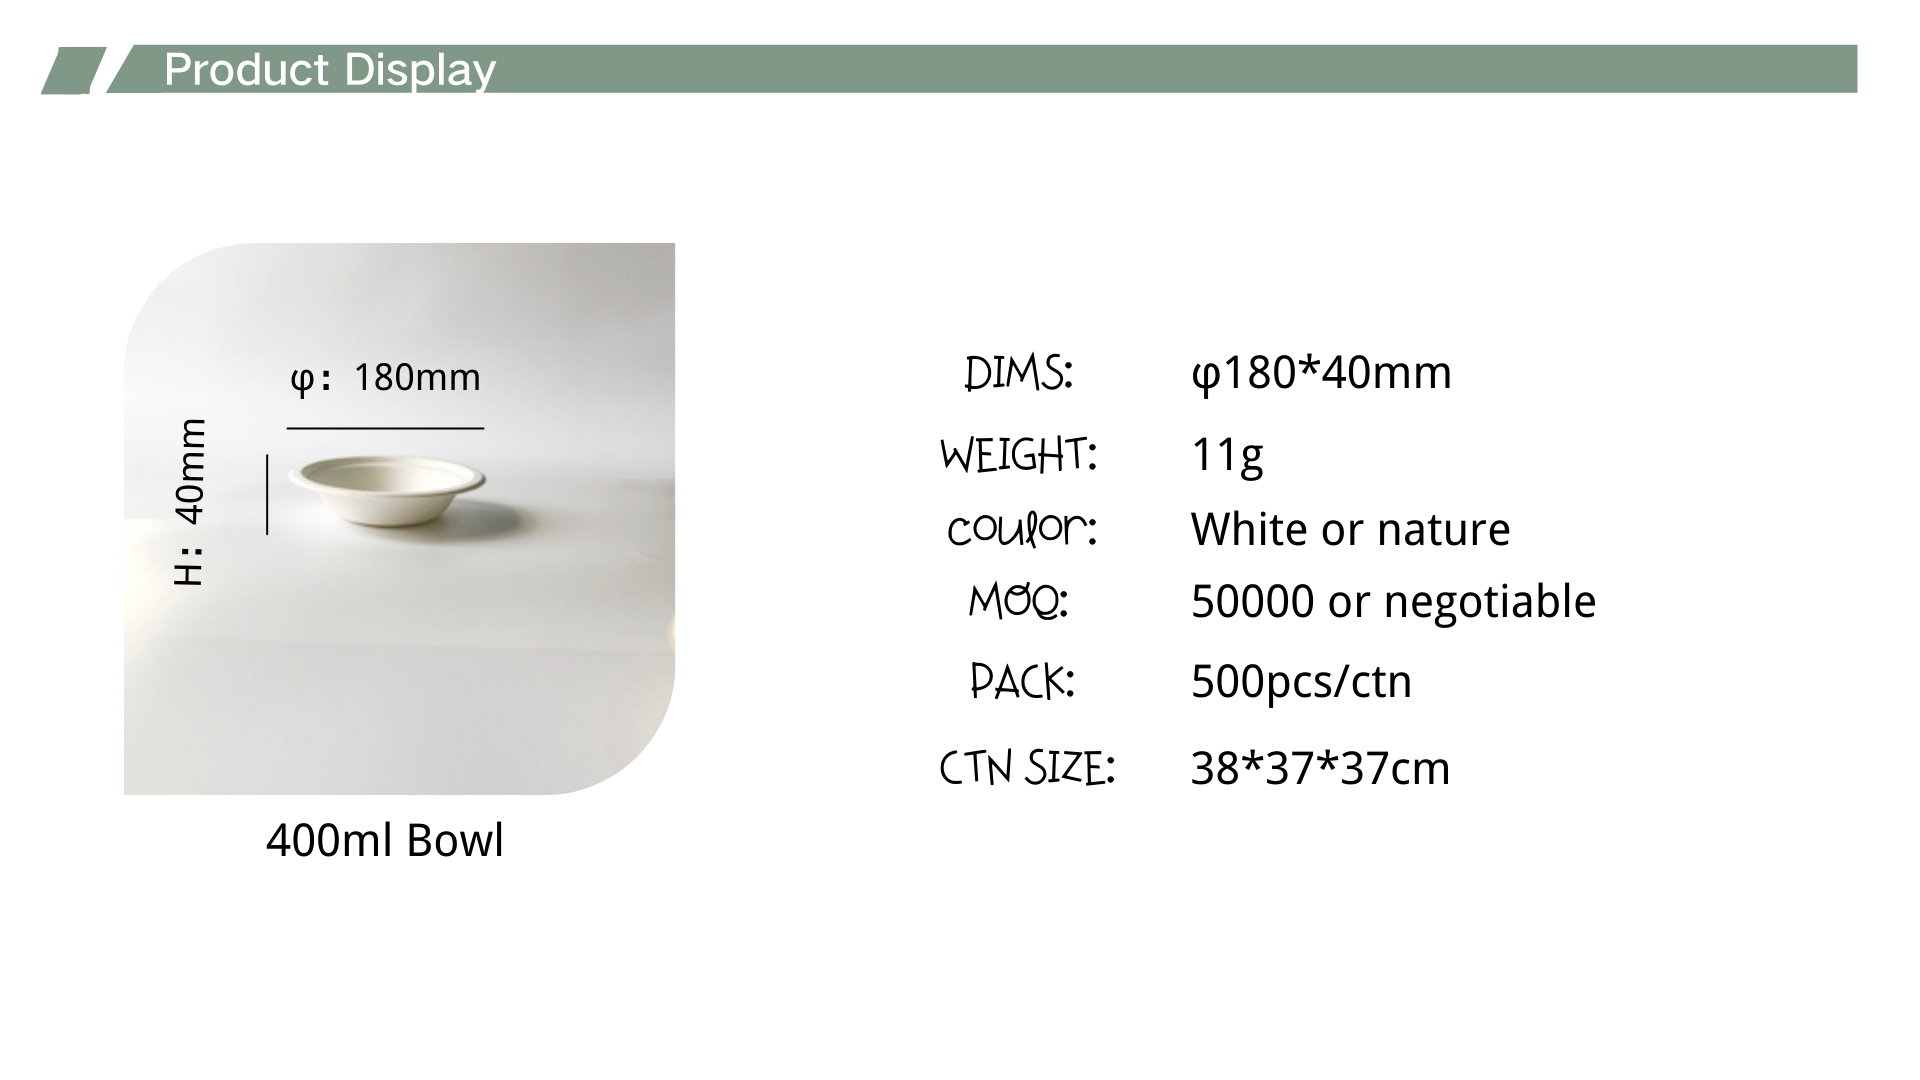 400ml popular bowl